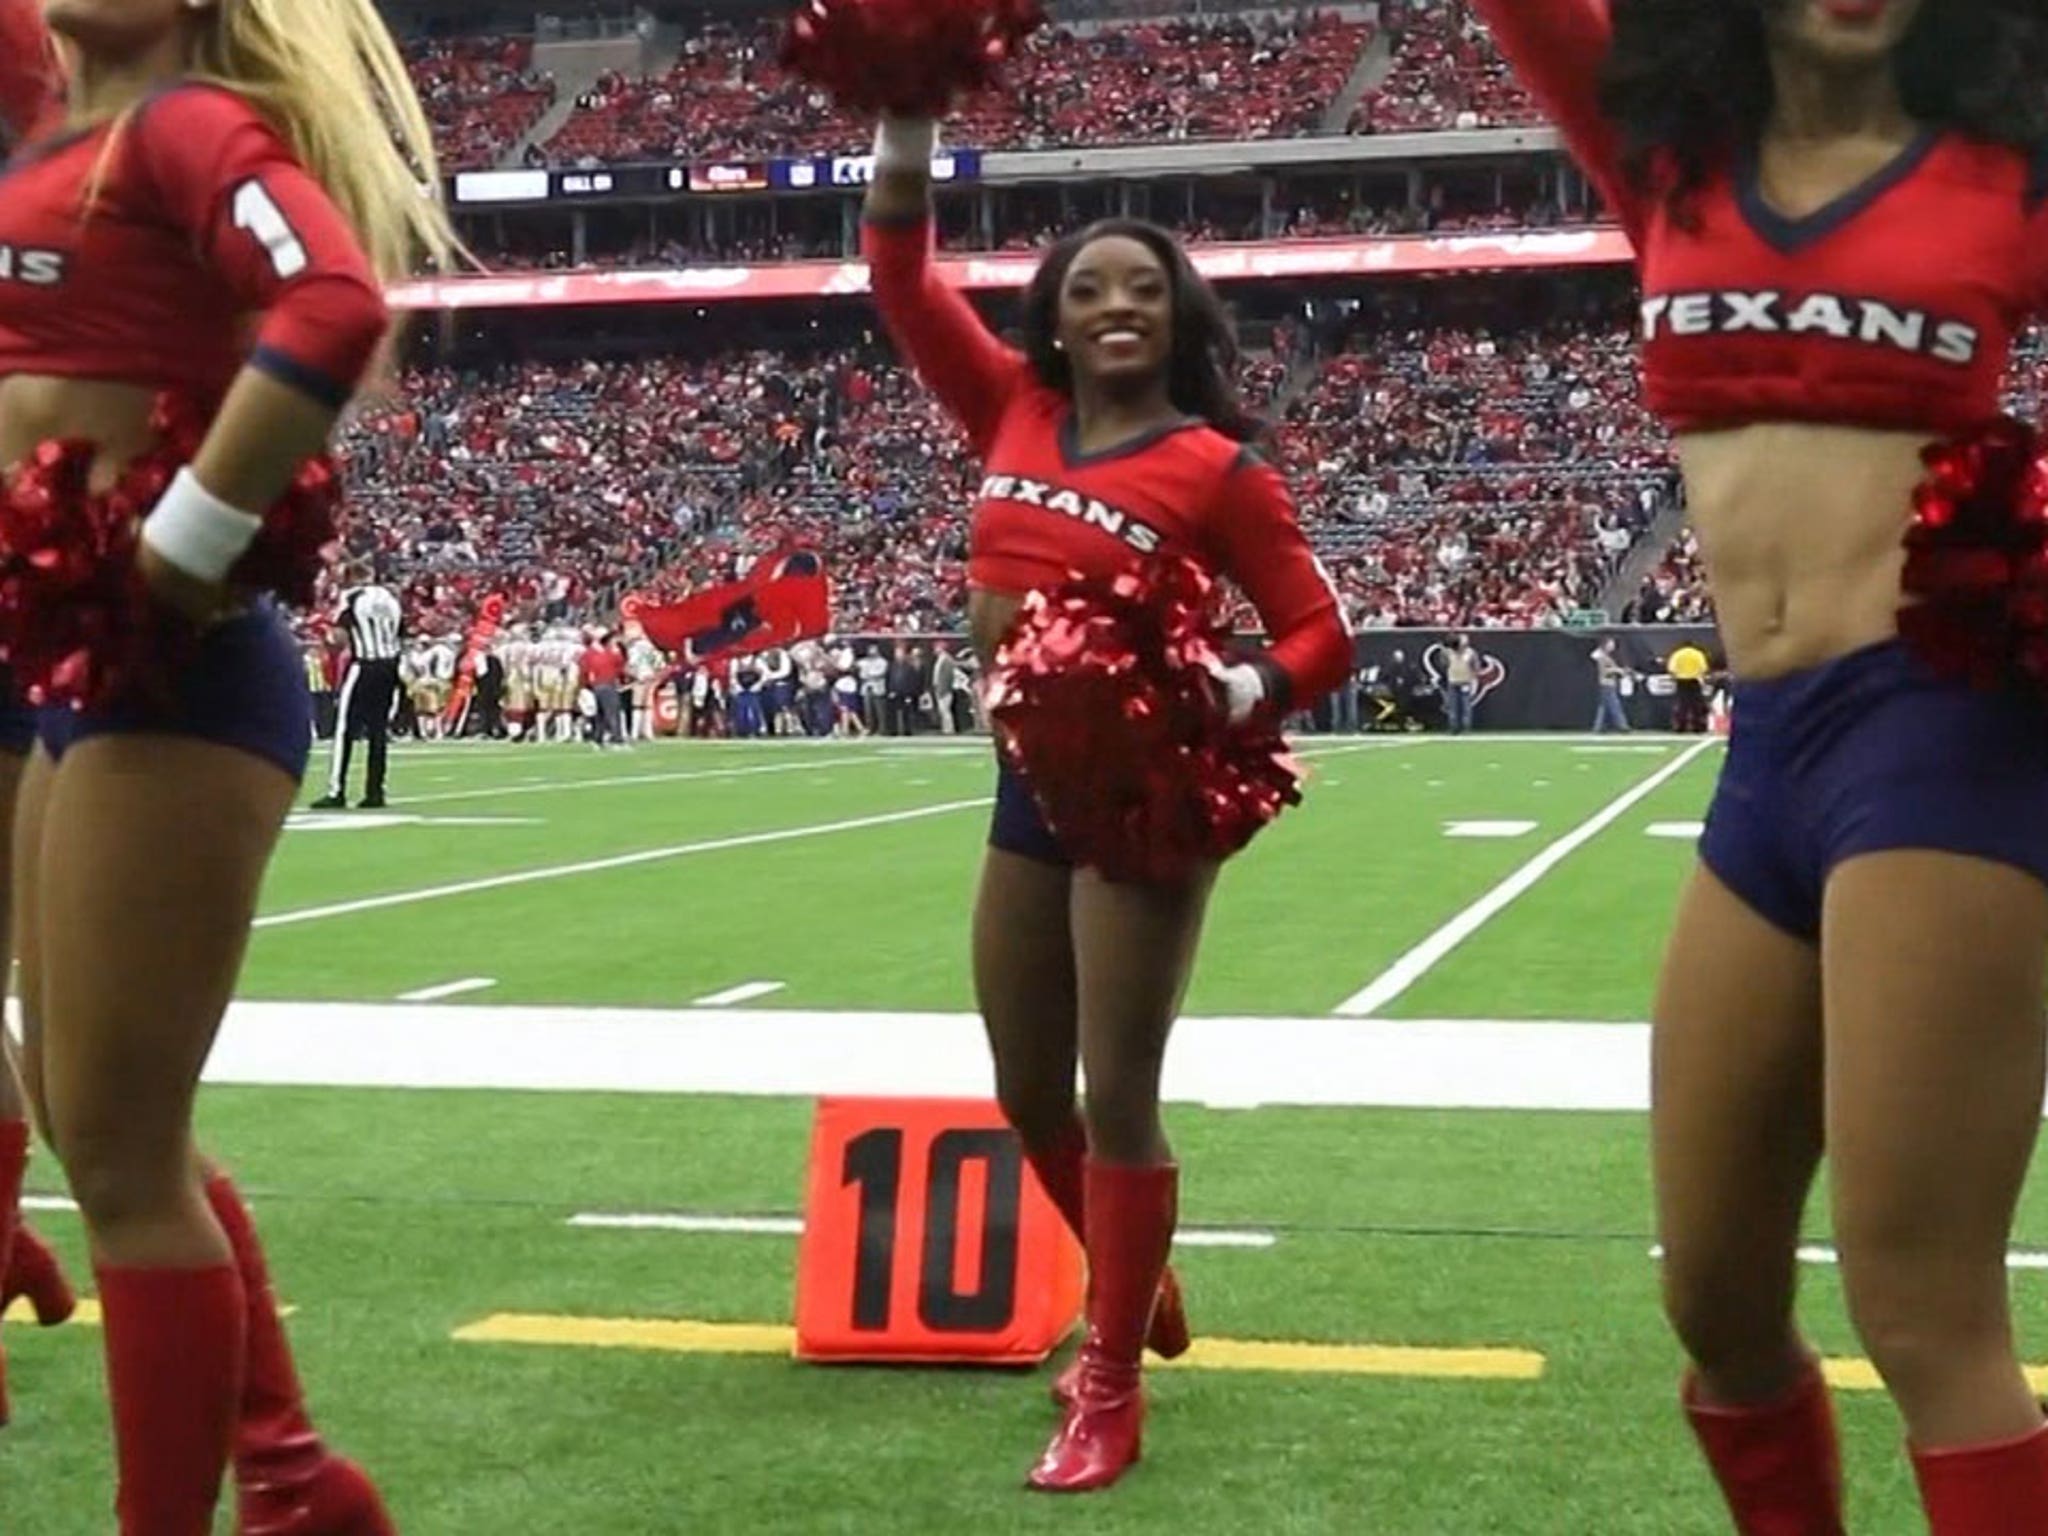 Simone Biles Makes Debut as Honorary Texans Cheerleader